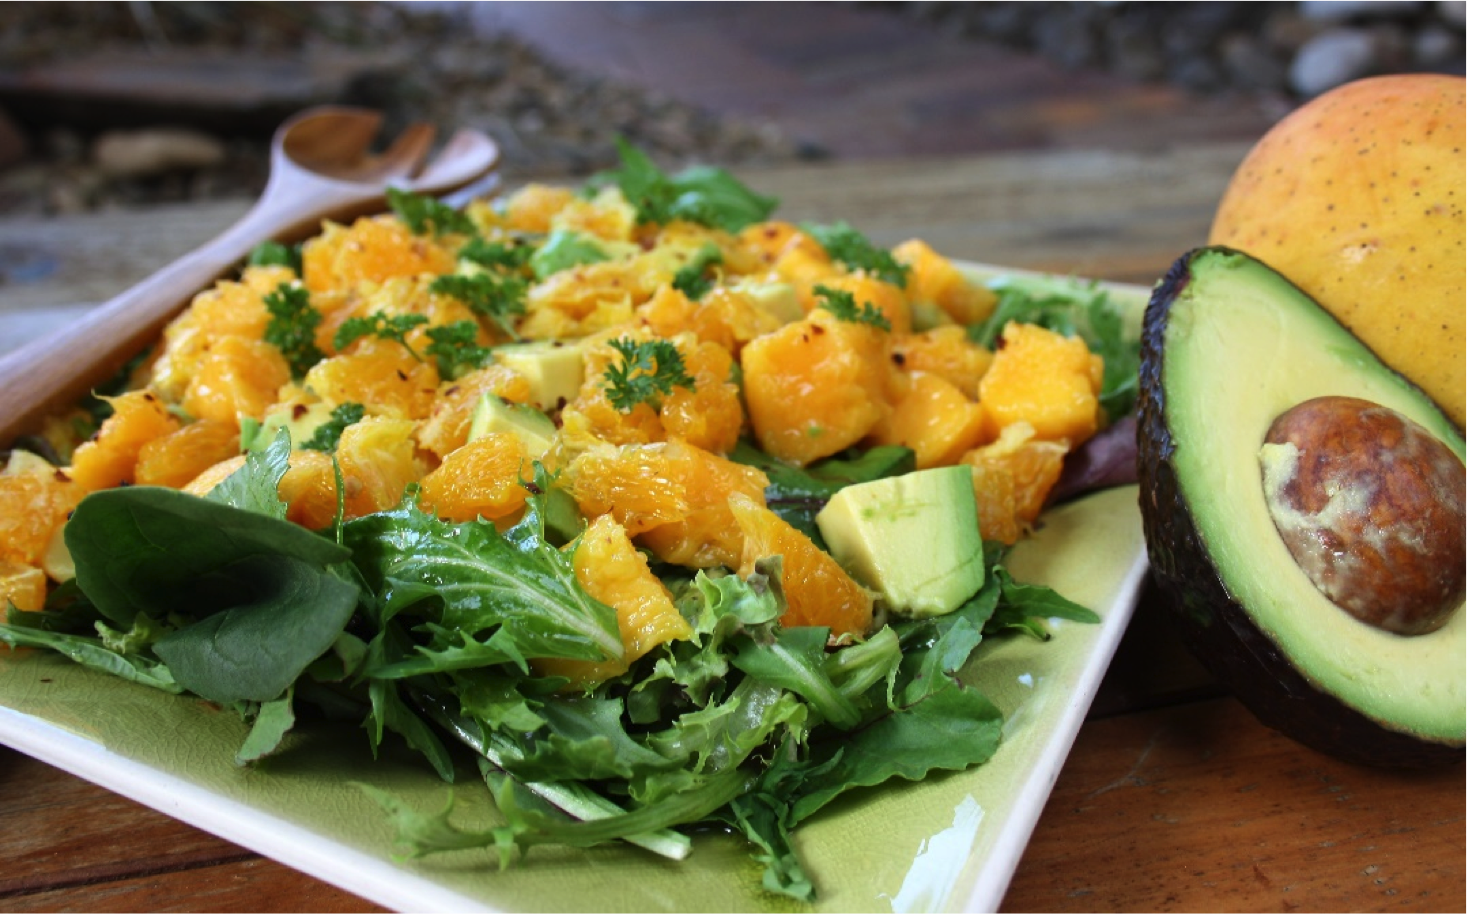 Recipe of the week: Mango and Avocado Salad